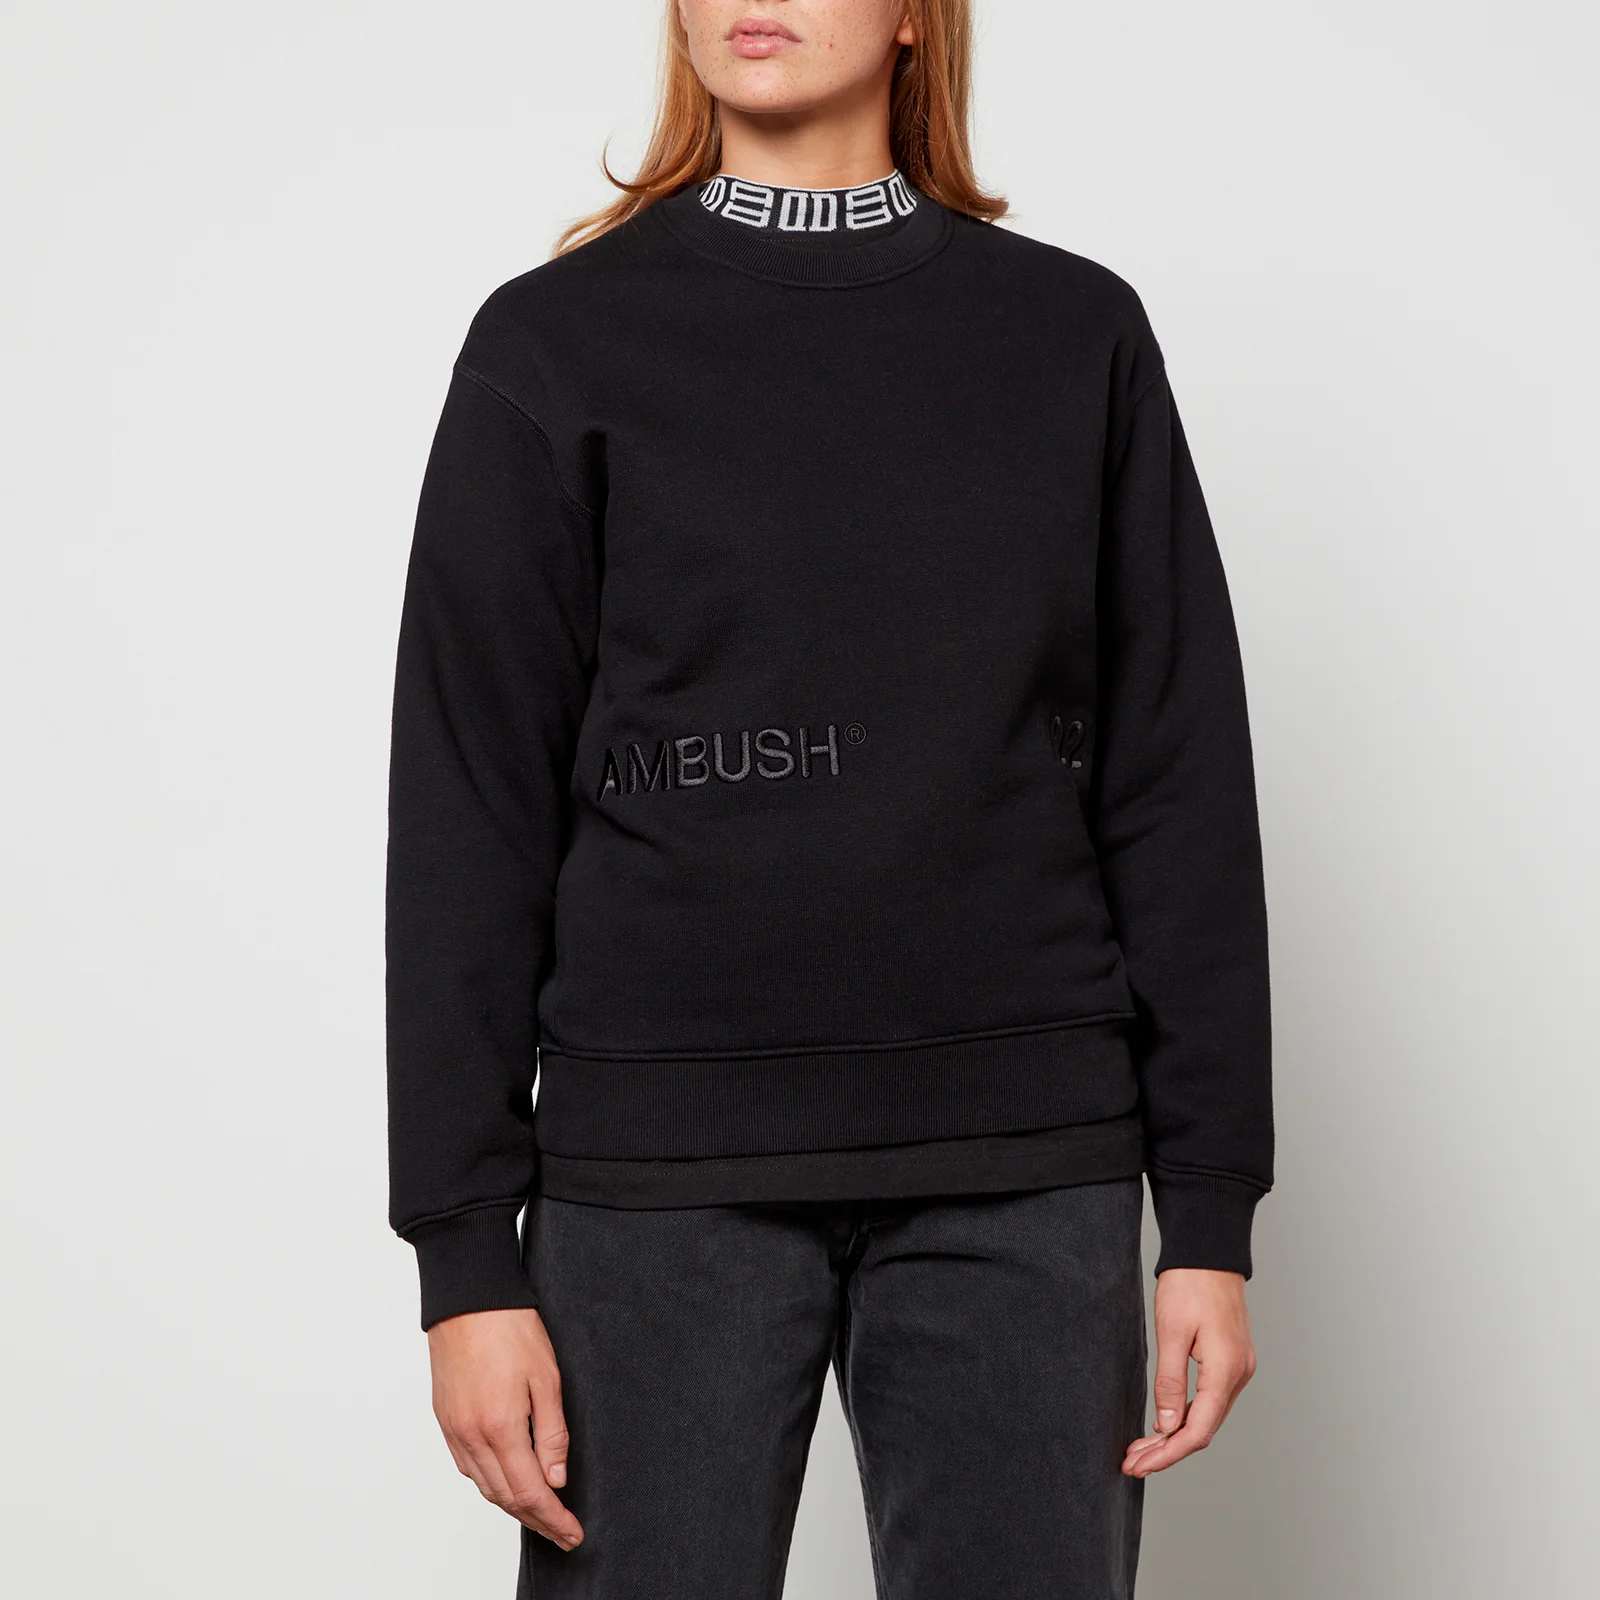 AMBUSH Women's Crewneck Sweatshirt - Black Image 1